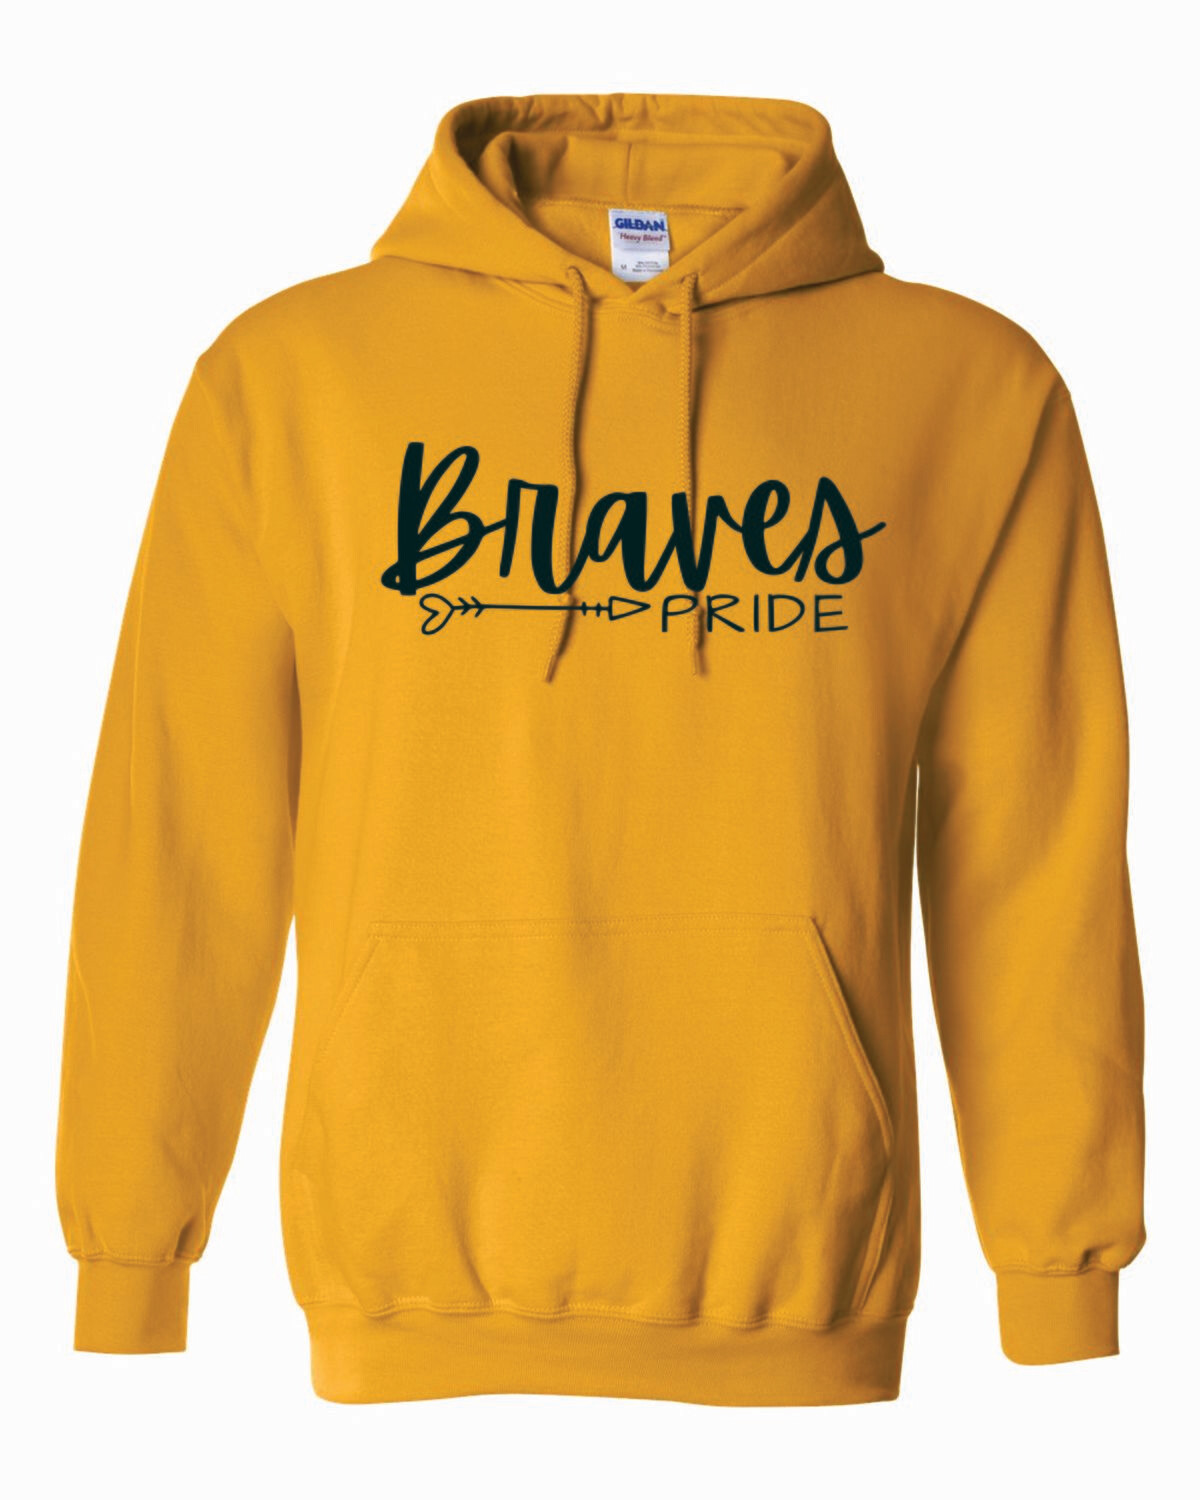 Braves PRIDE Hooded Sweatshirt, 5 colors available